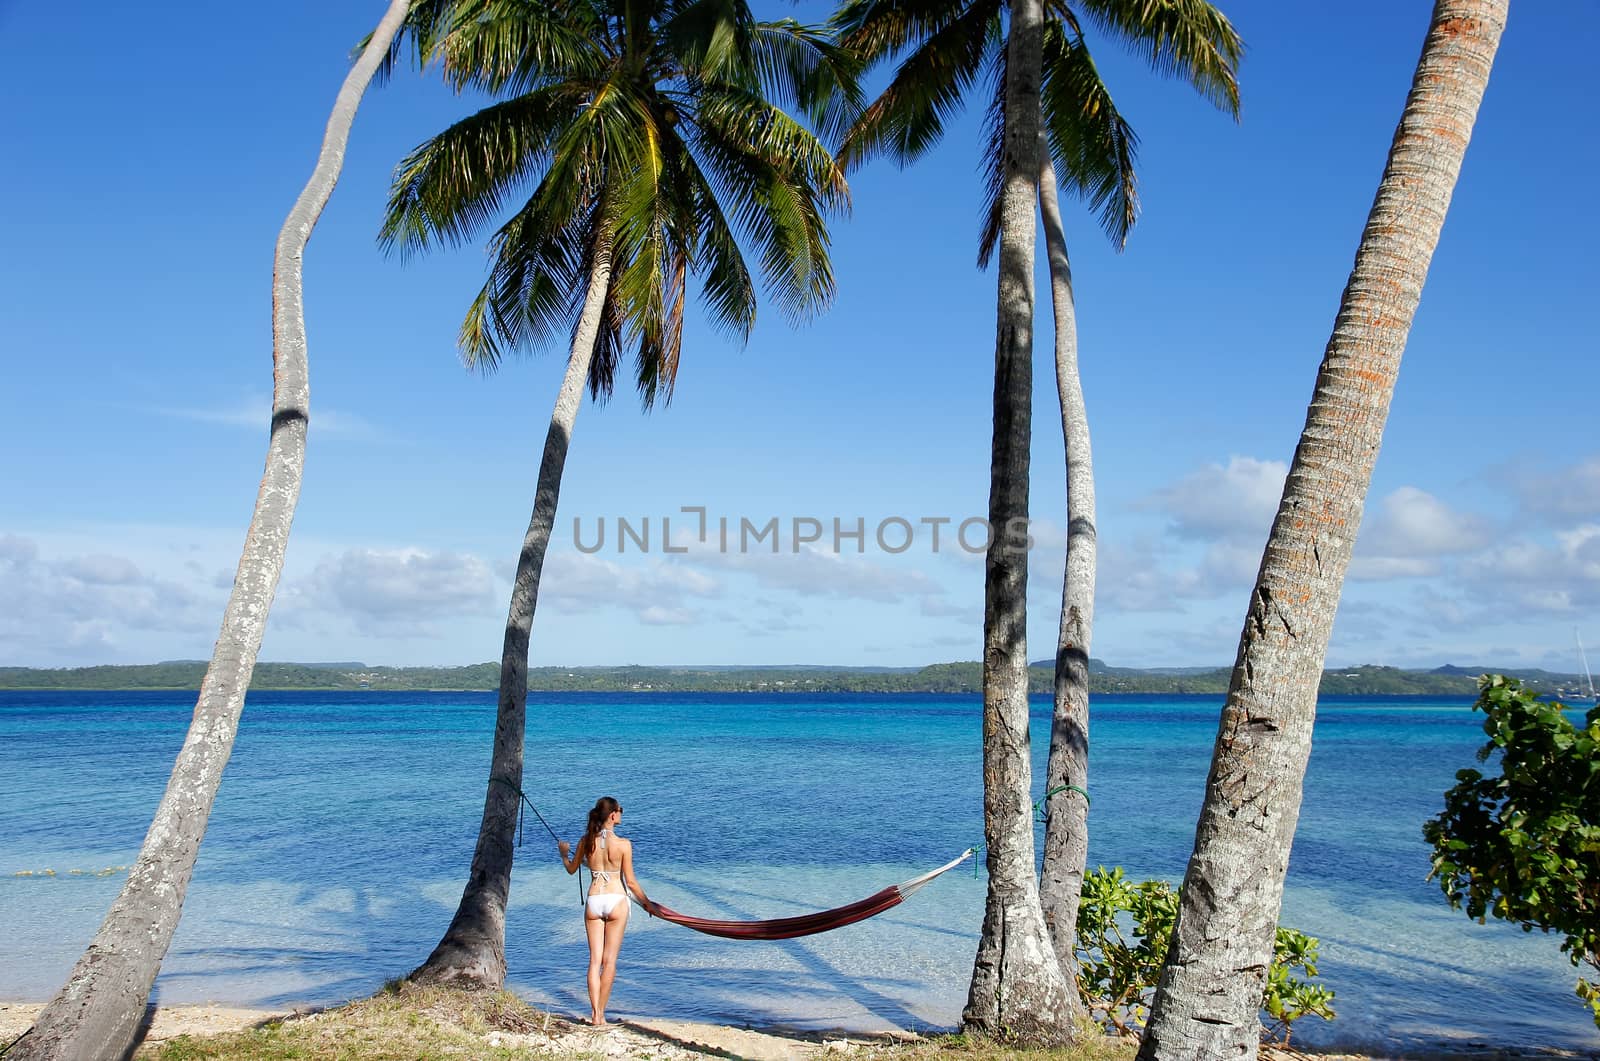 Young woman in bikini standing by the hammock between palm trees, Ofu island, Vavau group, Tonga